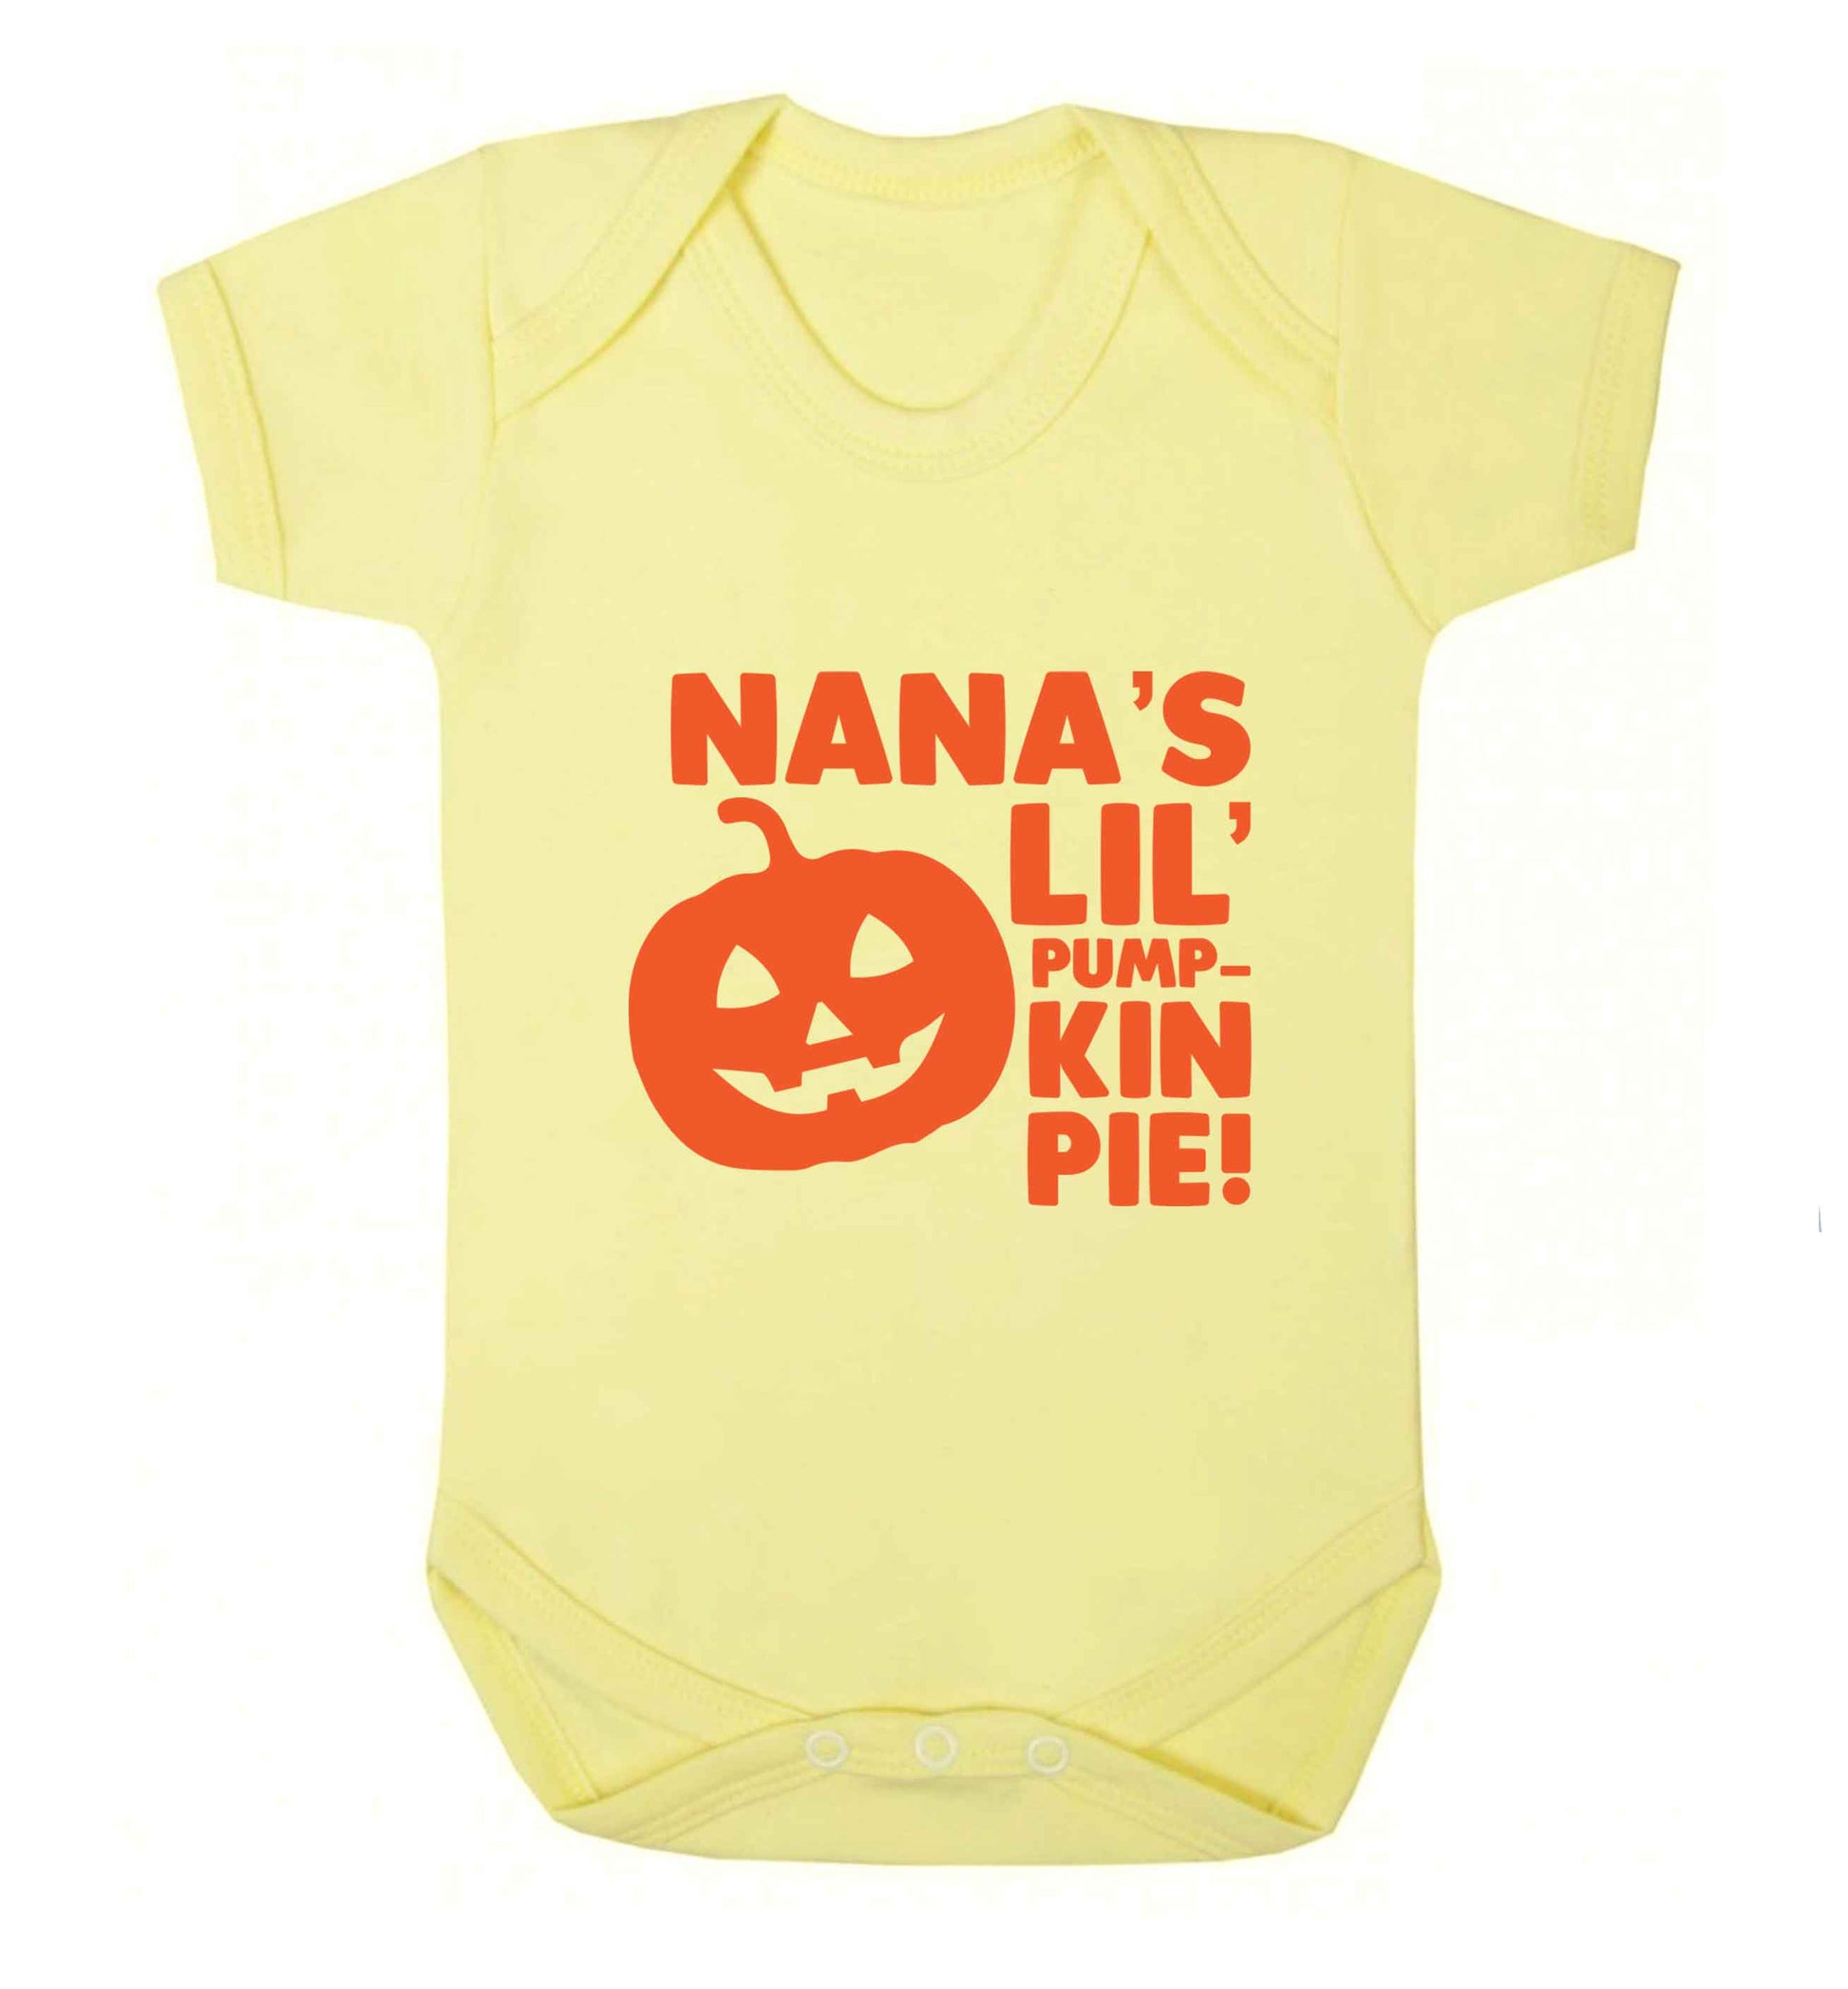 Nana's lil' pumpkin pie baby vest pale yellow 18-24 months